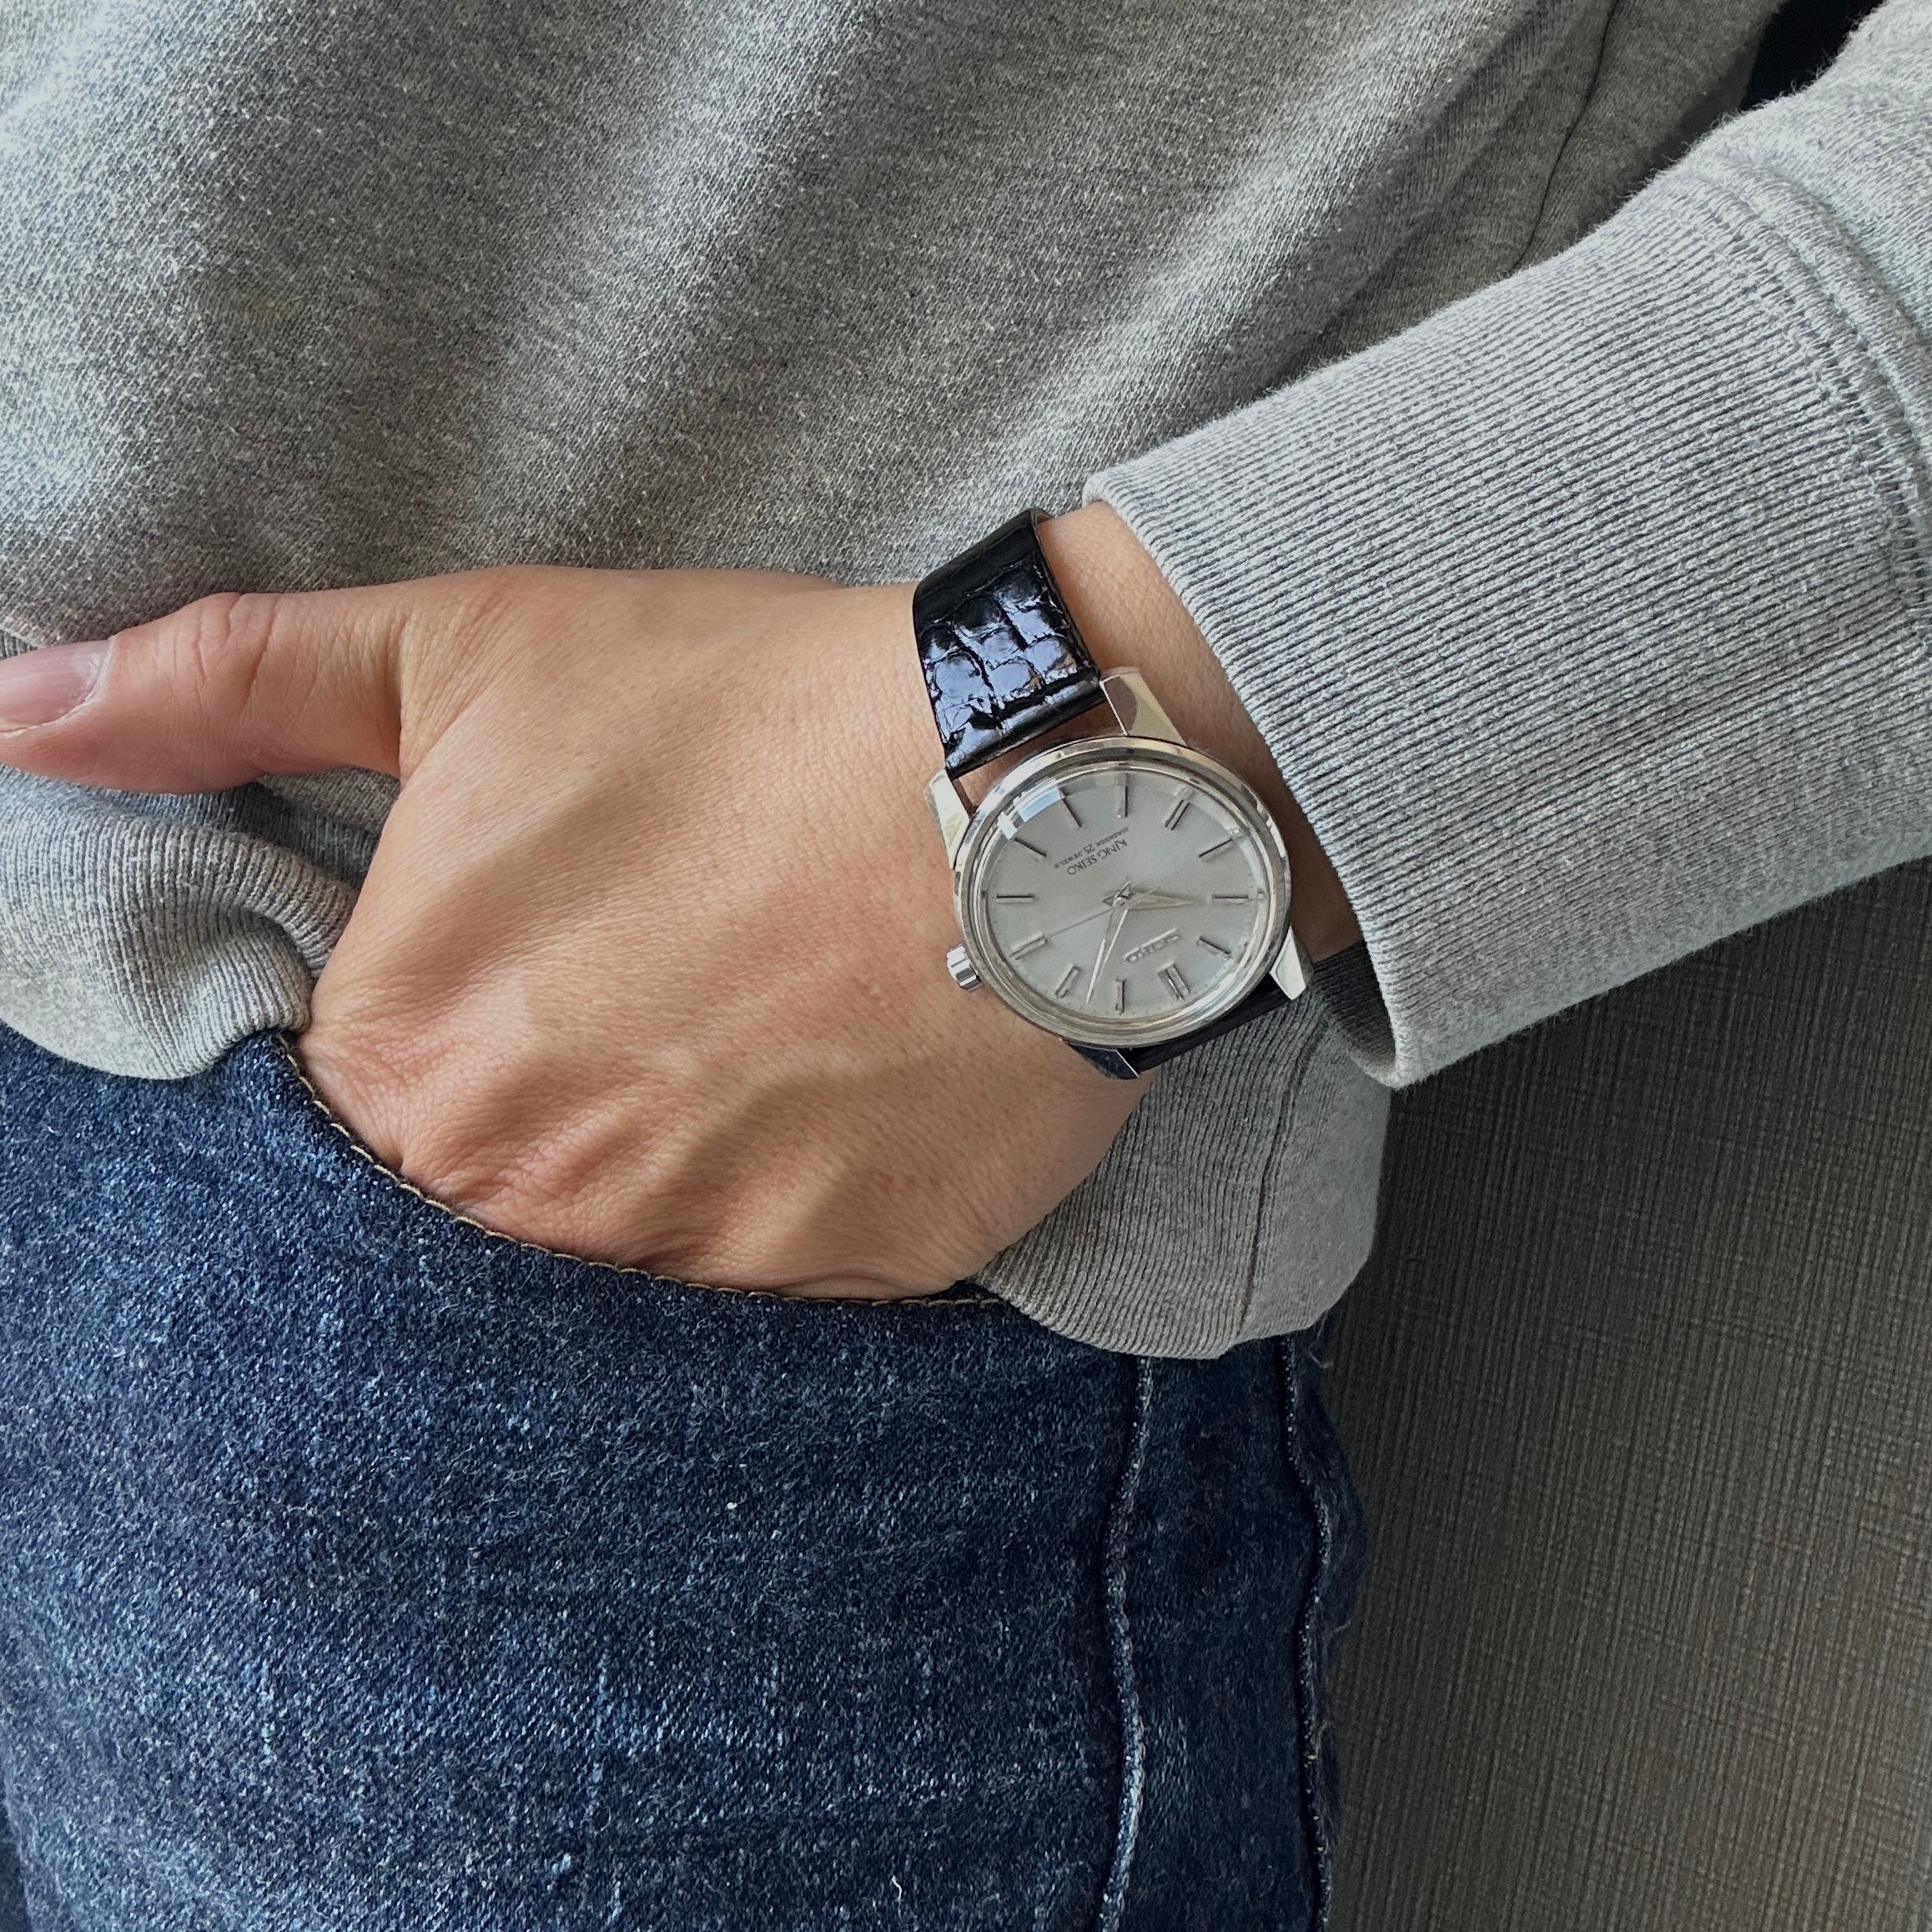 SEIKO】キングセイコー2nd初期型44999 – REGALO vintage watch